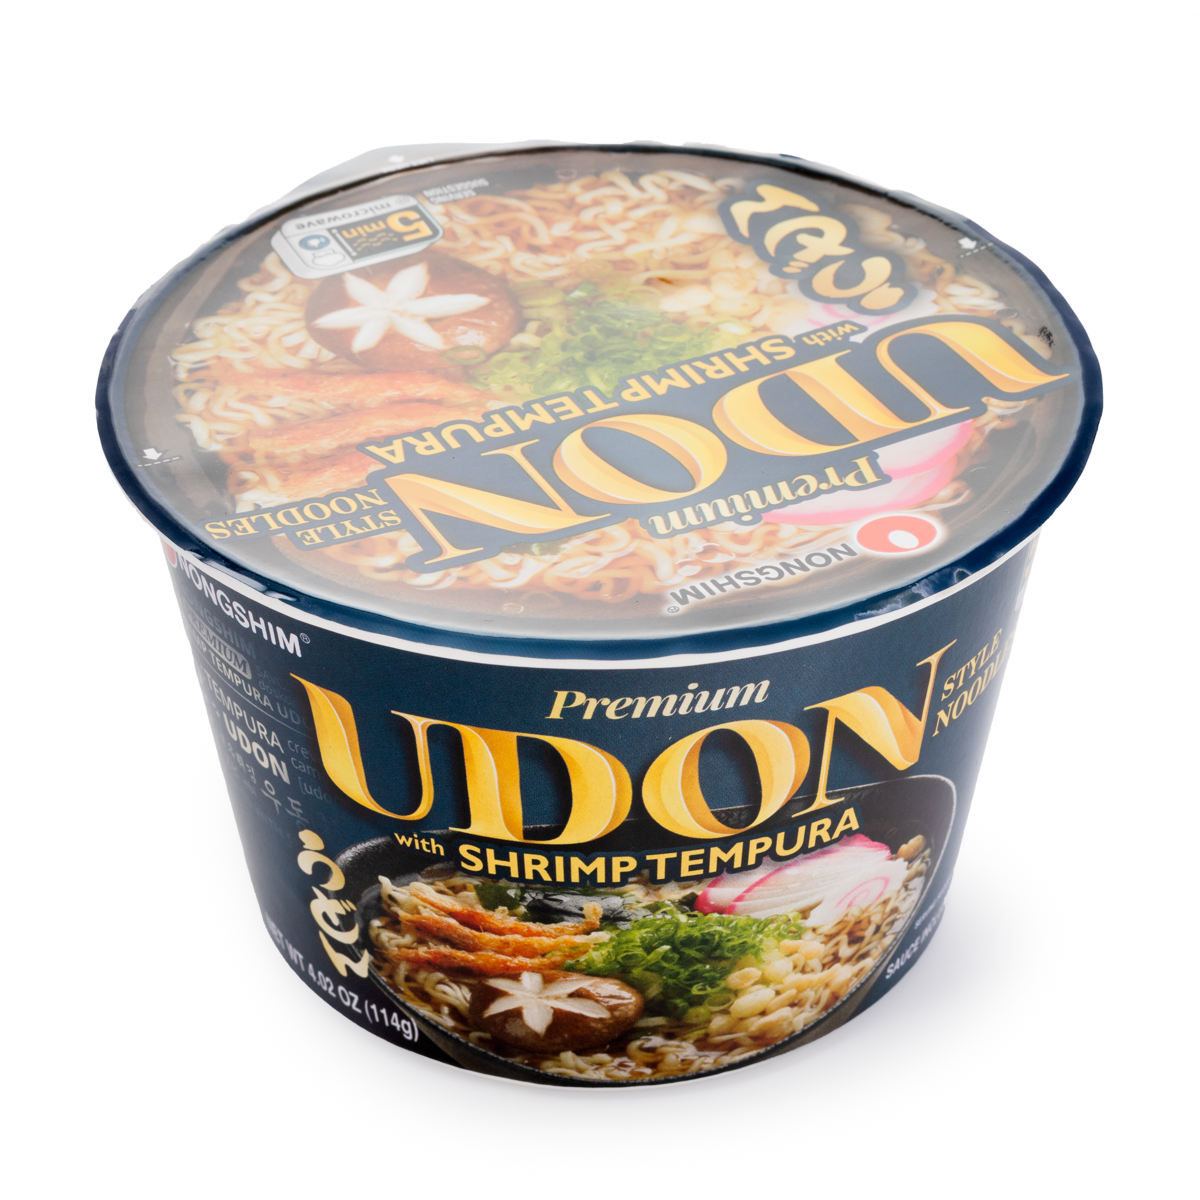 hot-nongshim-udon-style-noodles-with-shrimp-tempura